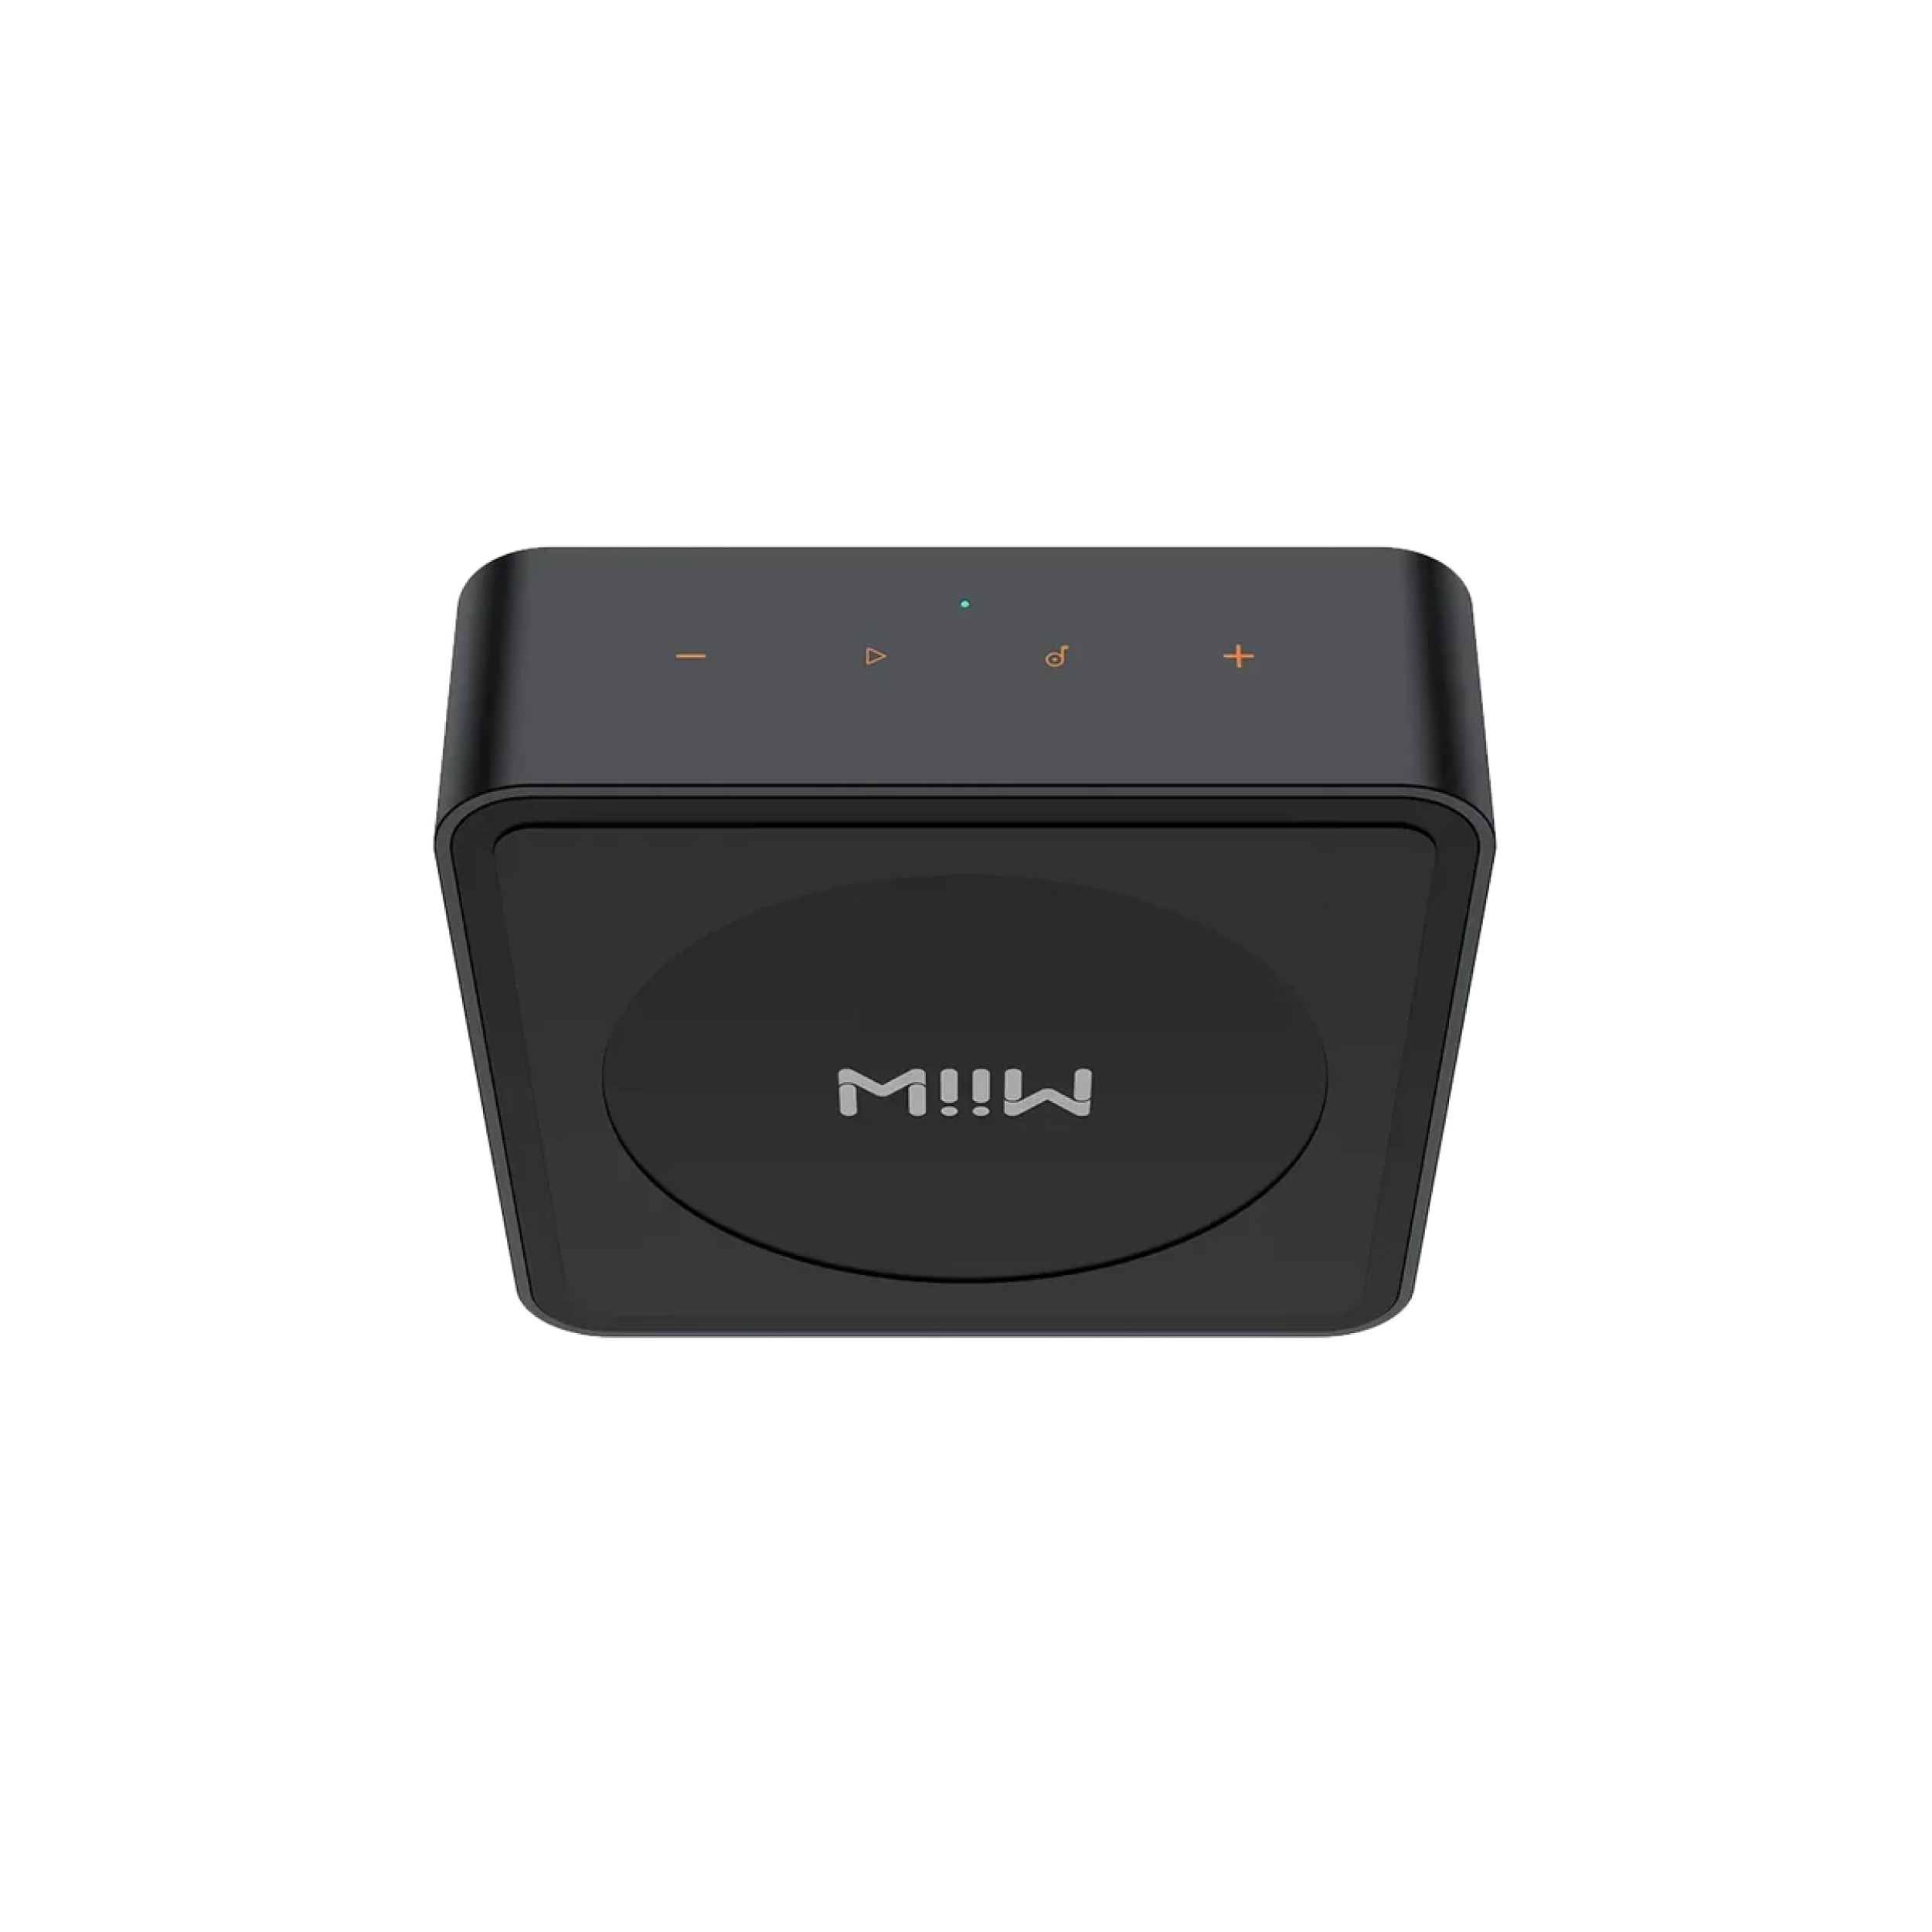 Buy WiiM Pro Plus here